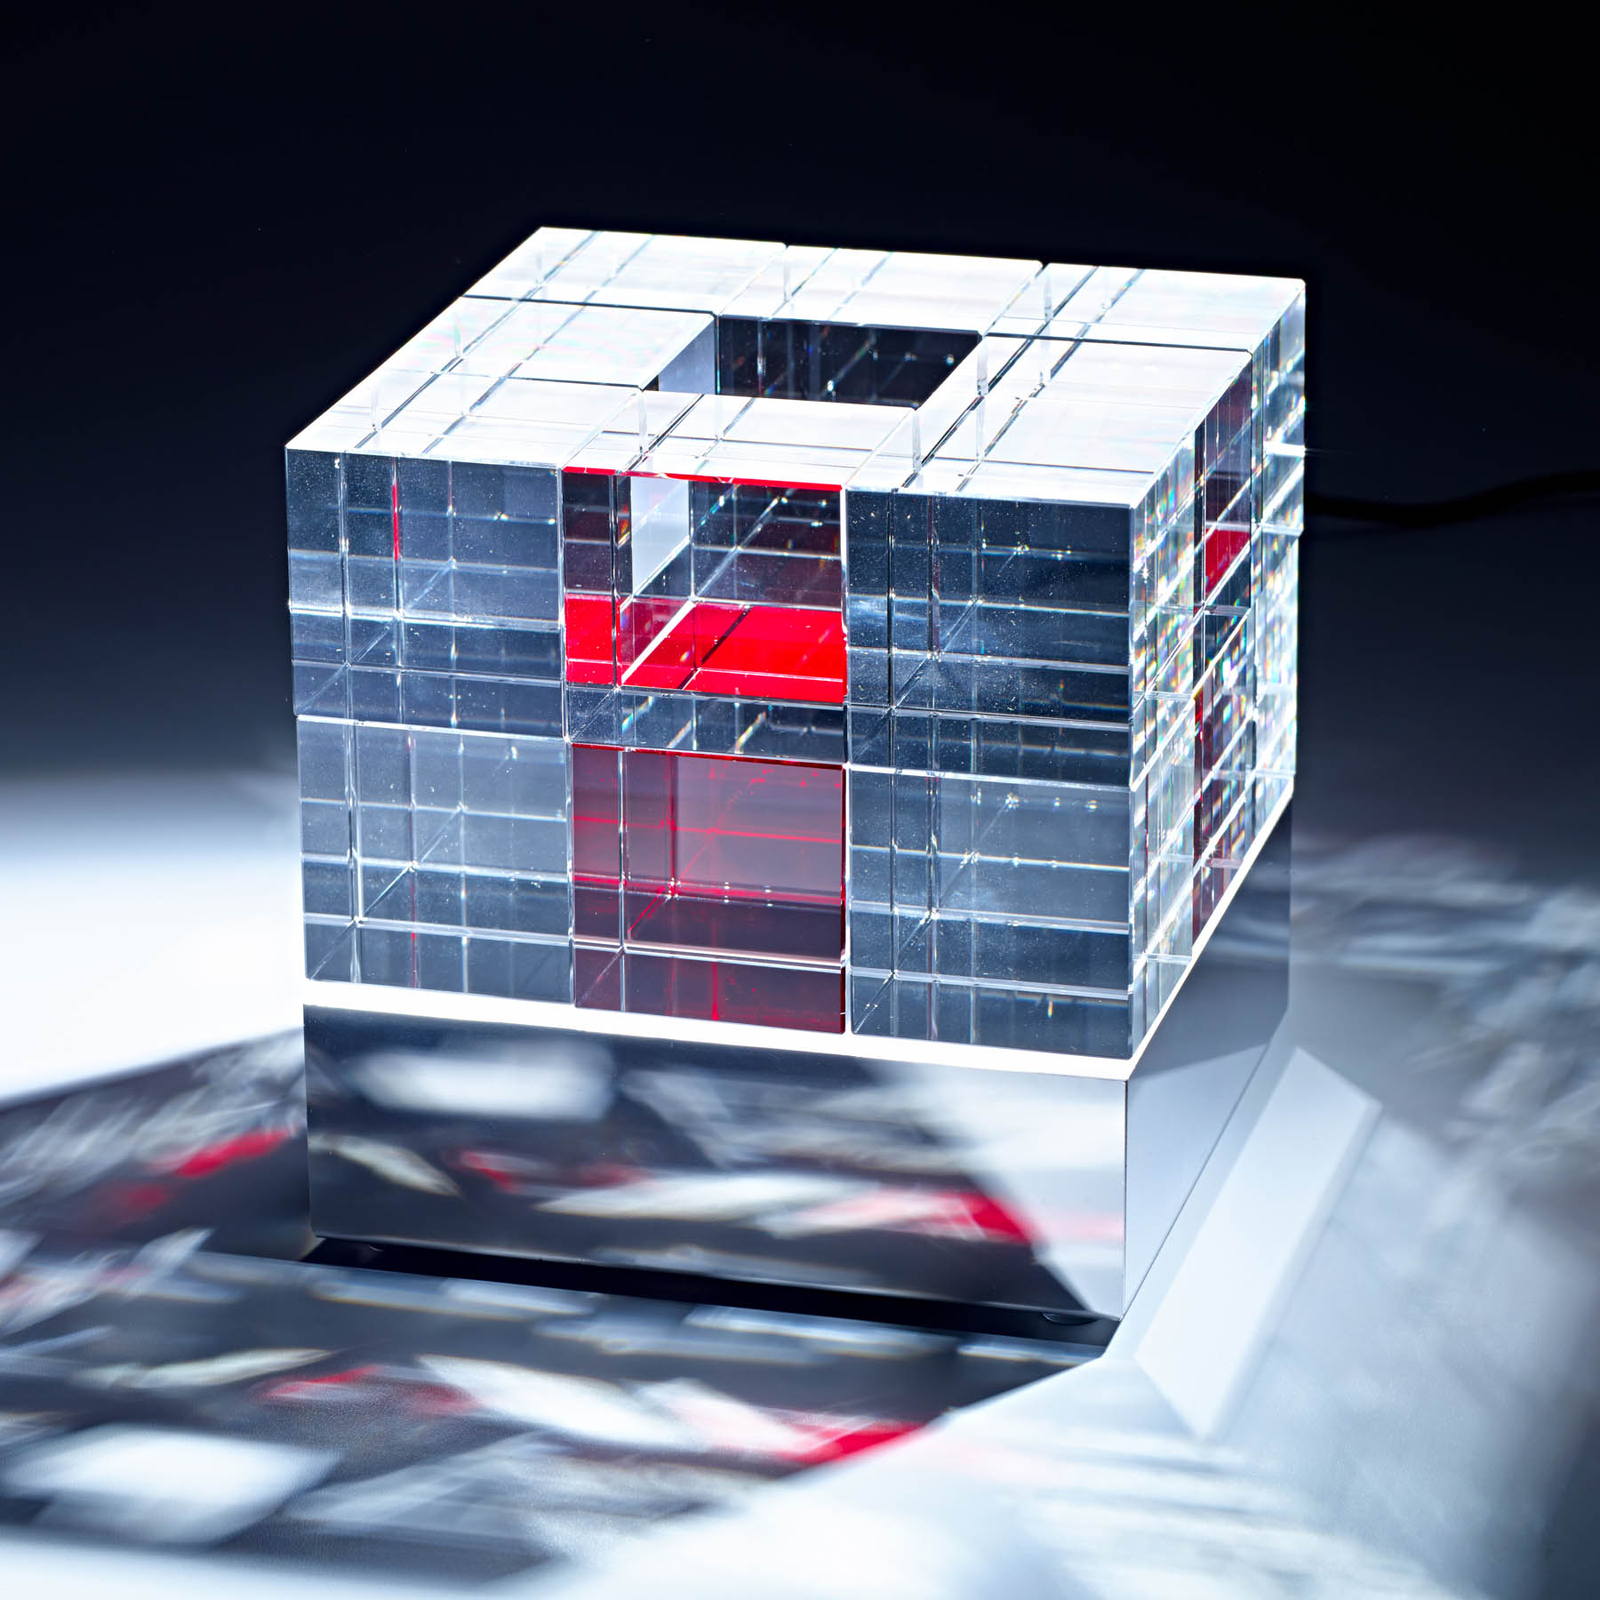 TECNOLUMEN Cubelight Move bordlampe, fargerik